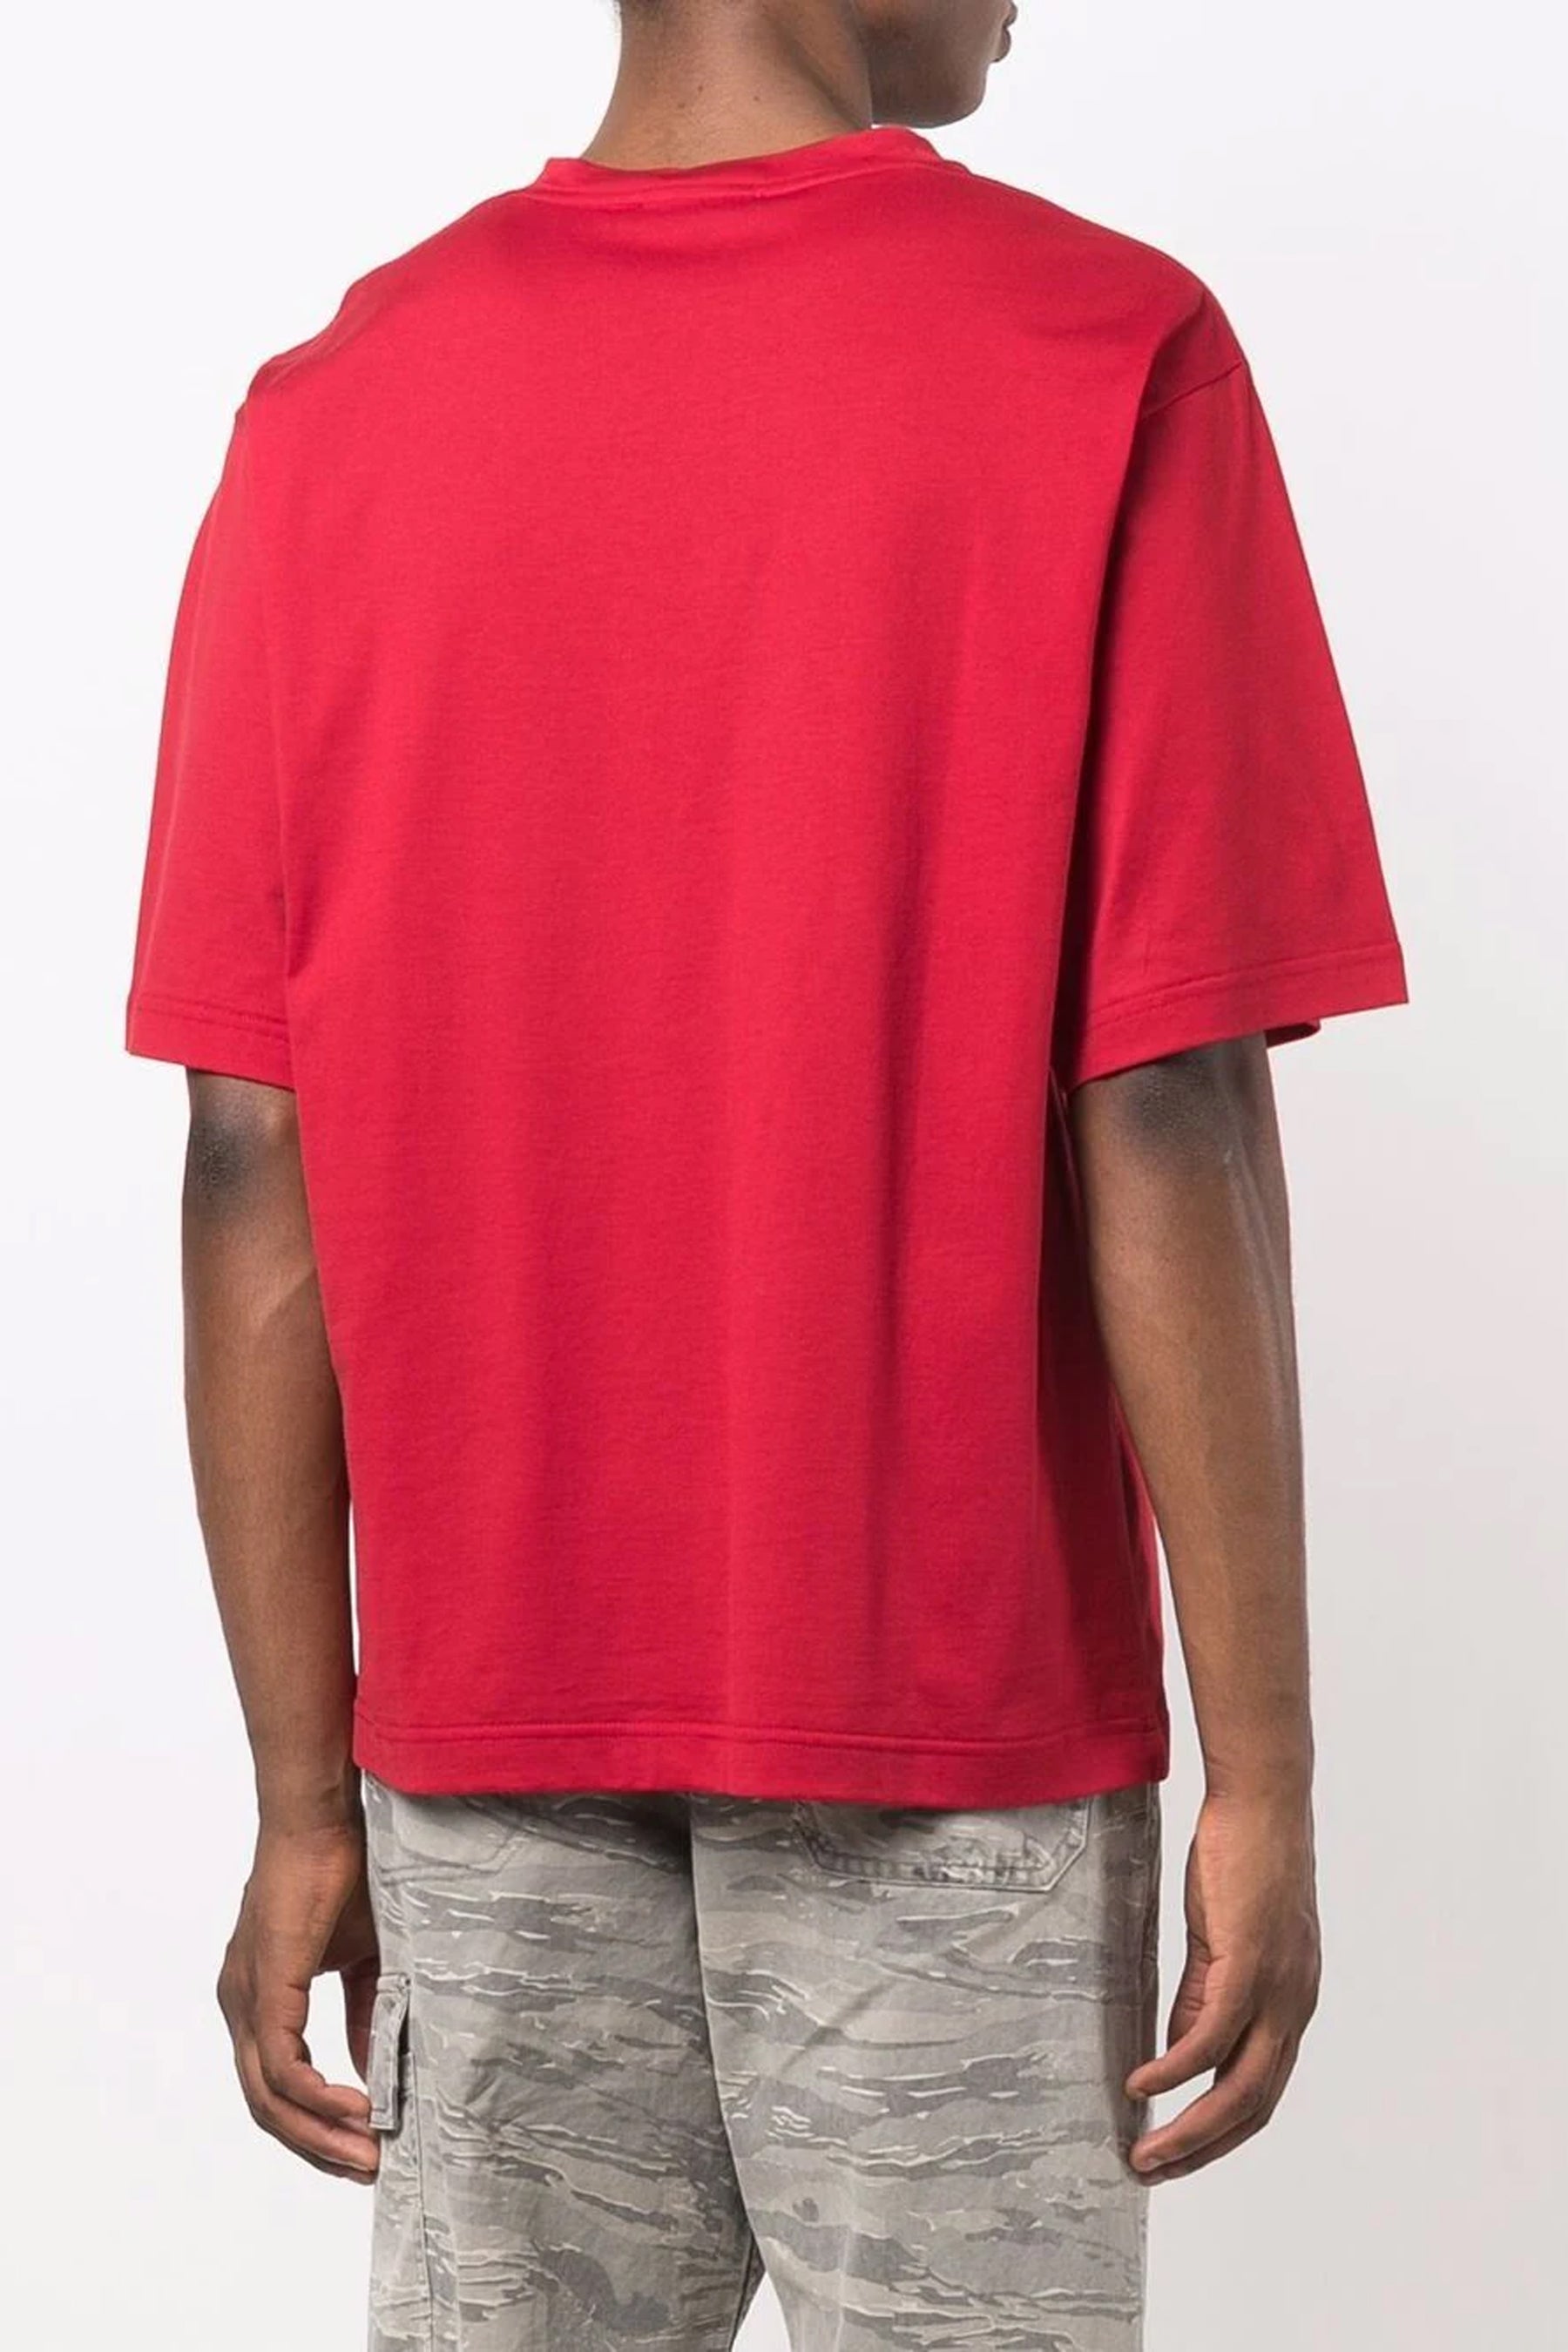 Dolce & Gabbana logo-embossed Red cotton T-shirt